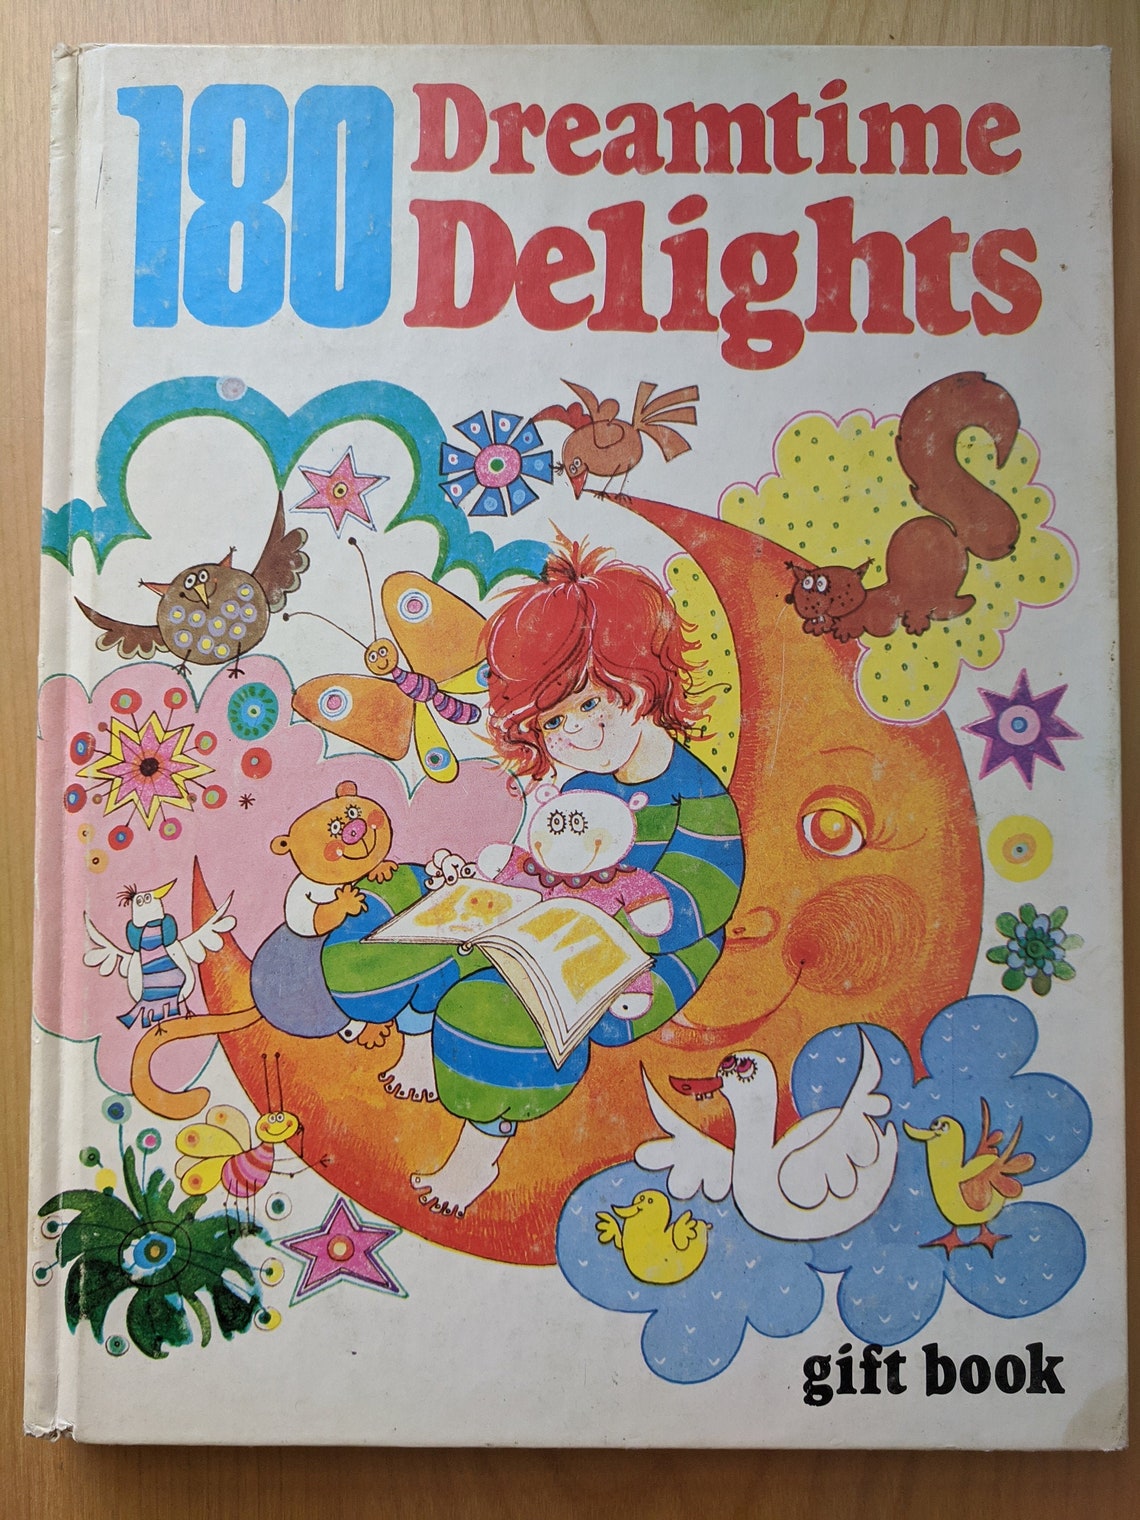 180 Dreamtime Delights Gift Book Vintage children's | Etsy